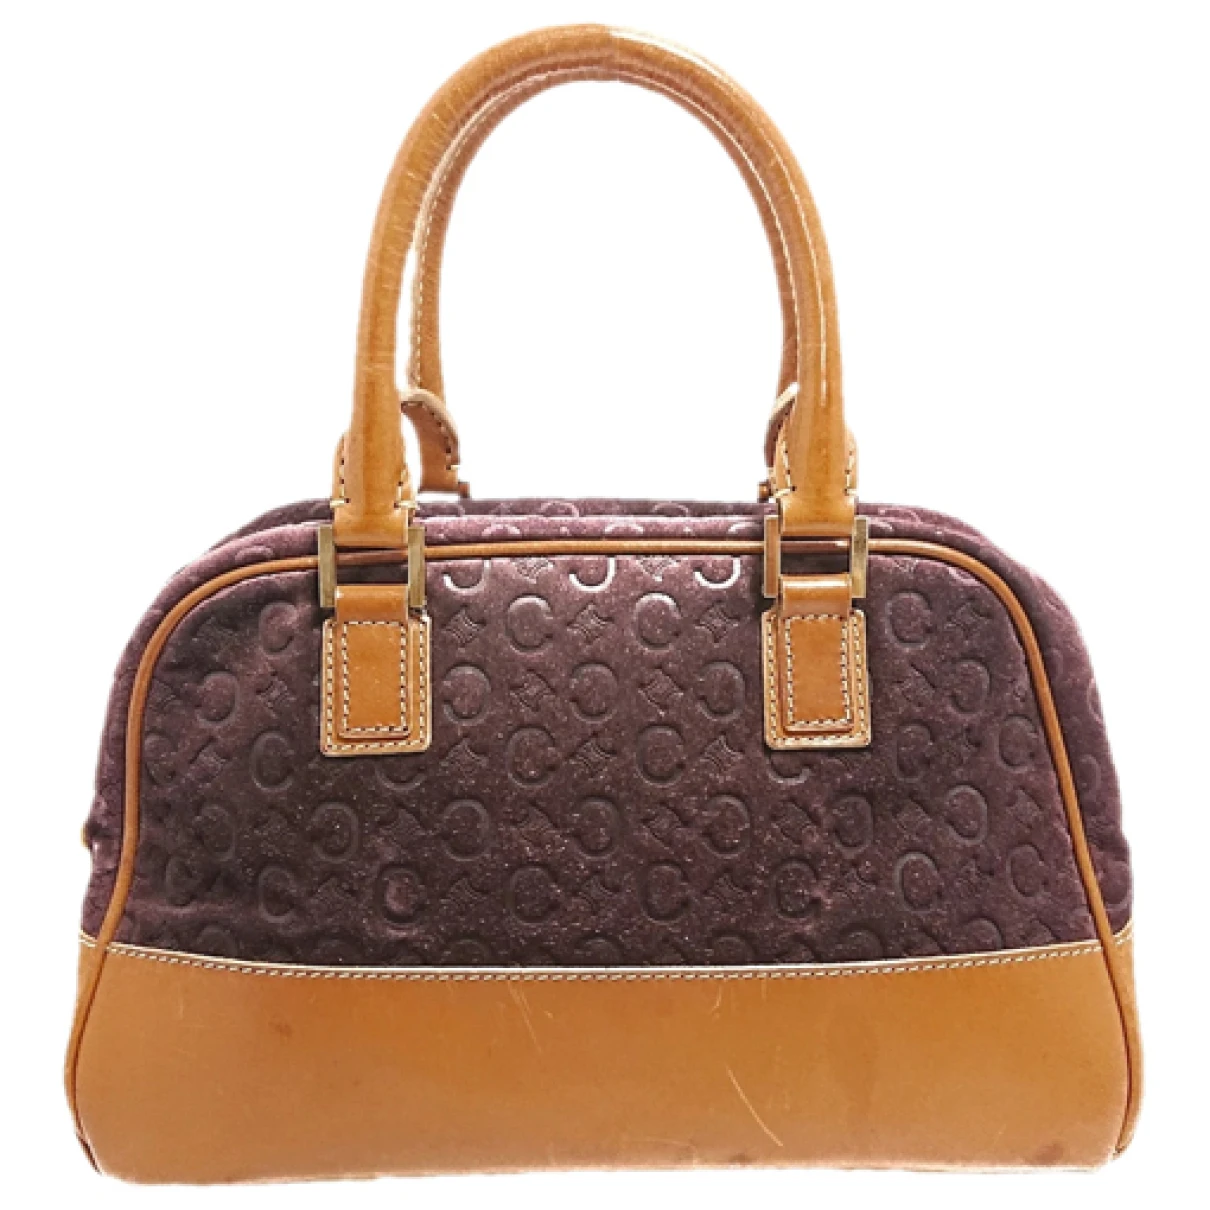 Pre-owned Celine Handbag In Burgundy